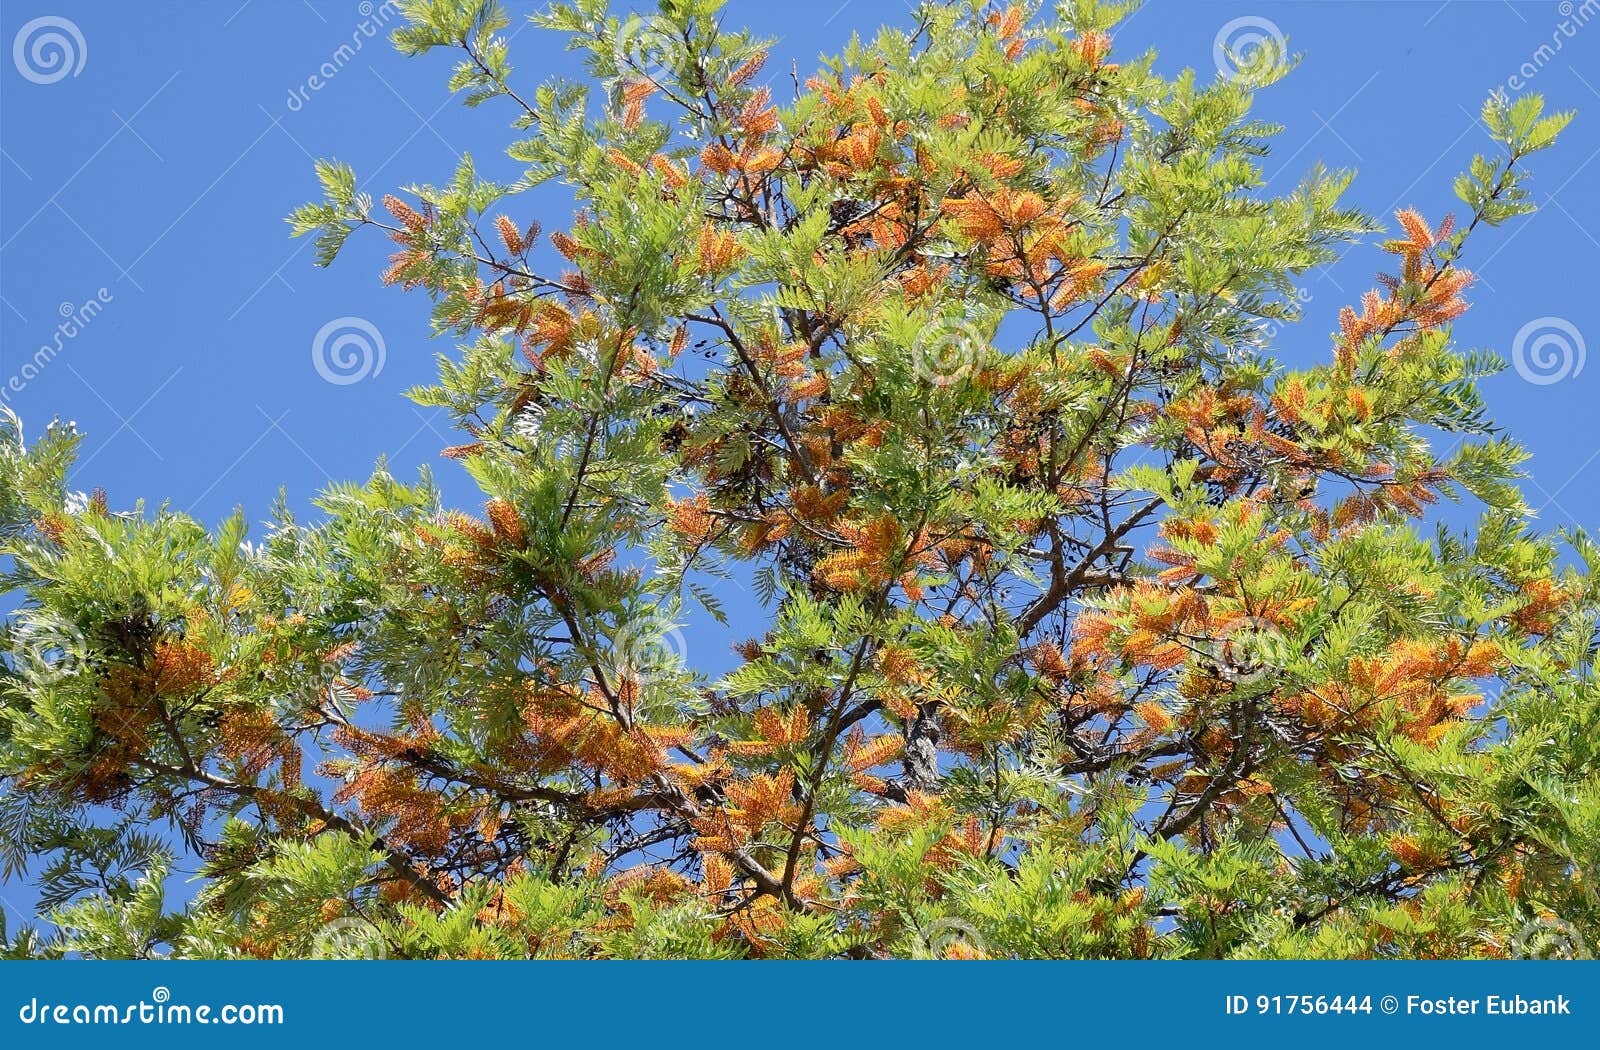 silk oak tree or grevillea robusta in laguna woods,caifornia.